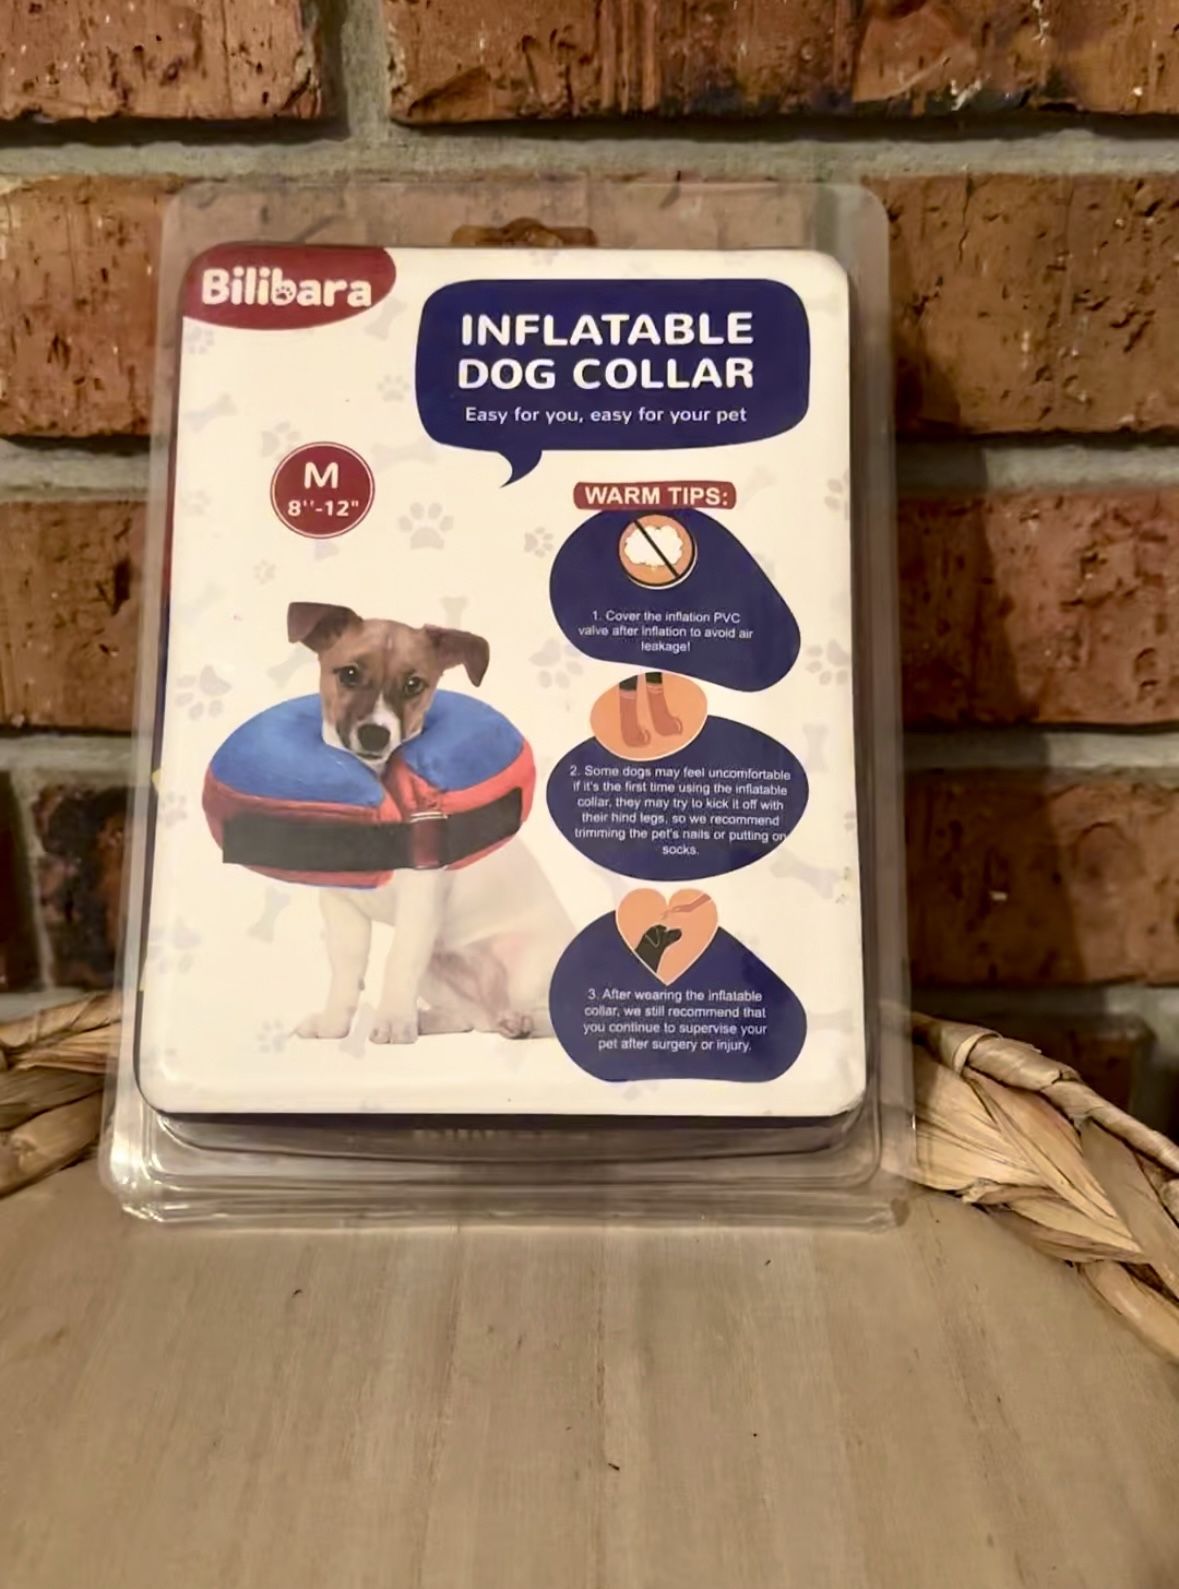 Inflatable Dog Collar Size Medium 8”-12” New In Box Bilibara